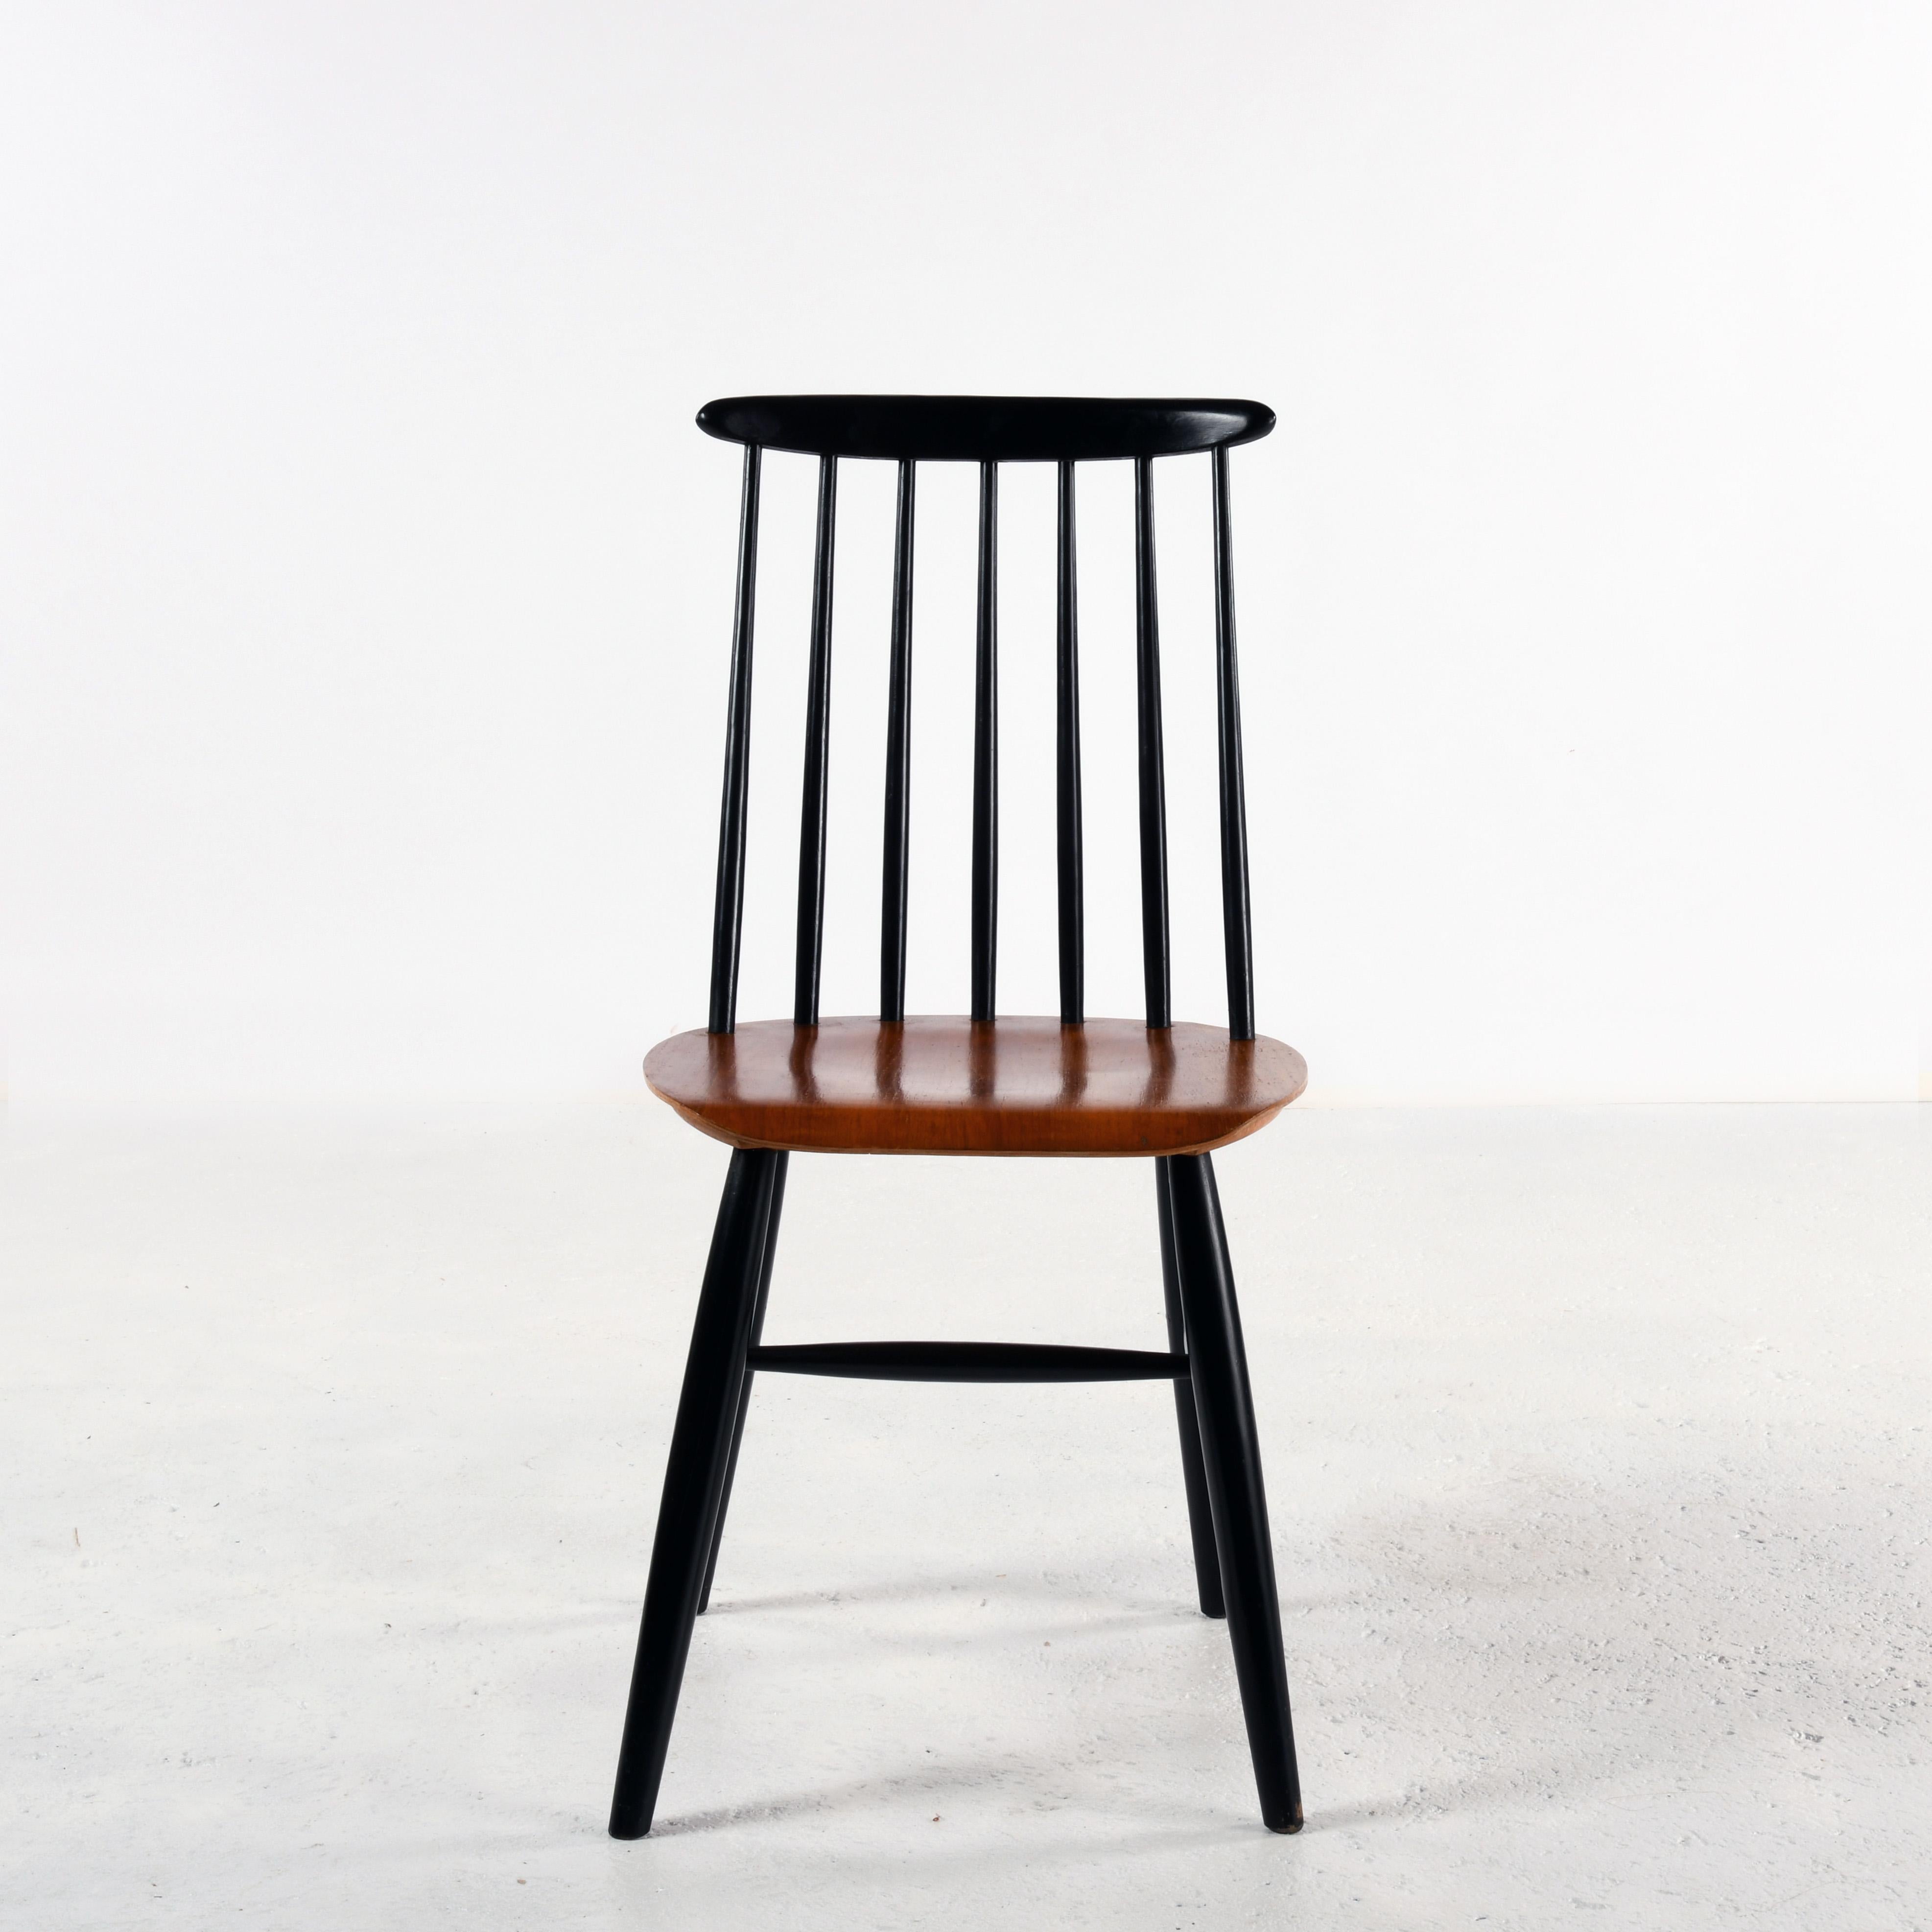 4 Fanett chair designed by Ilmari Tapiovaara 1